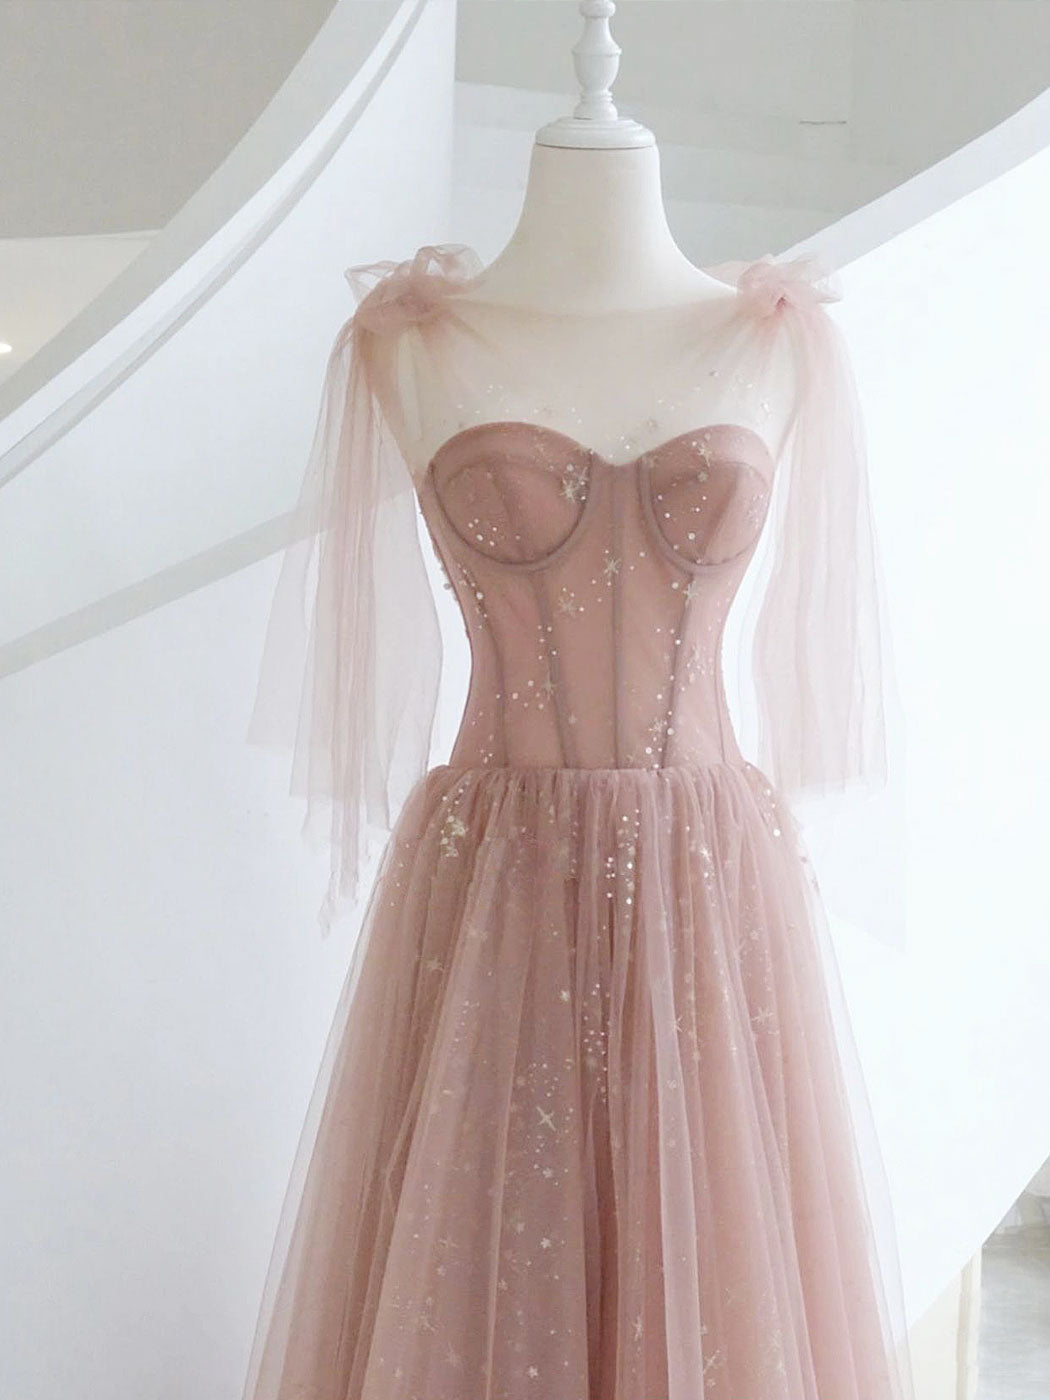 Pink A-Line Tulle Long Prom Dress, Pink Formal Graduation Dress